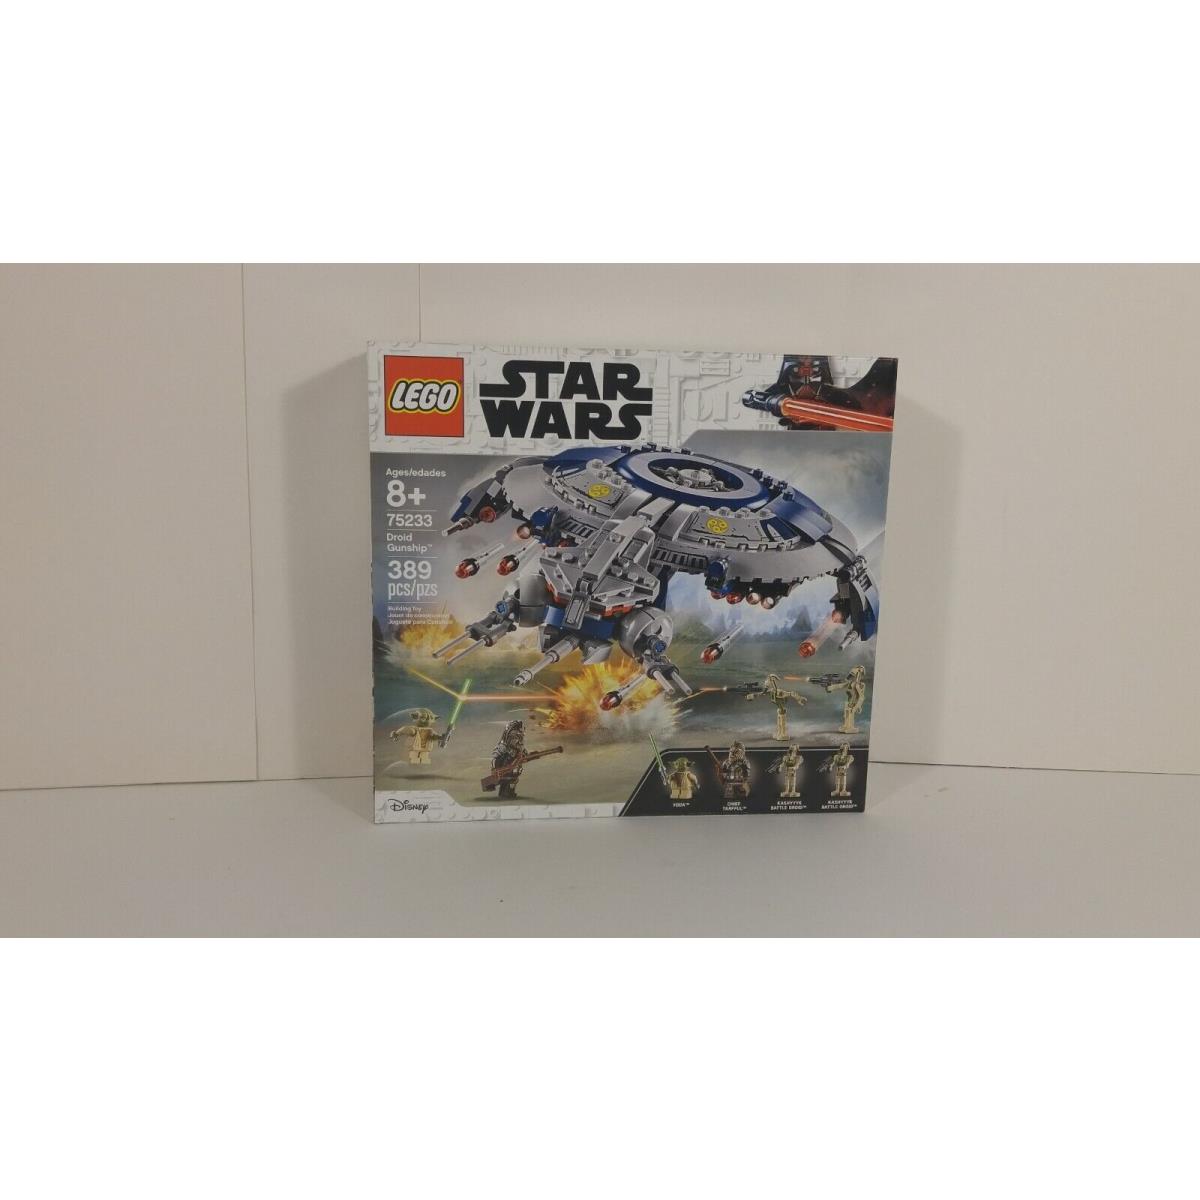 Lego Star Wars 75233 Droid Gunship Set Building Kit 389 Pcs Retired Set